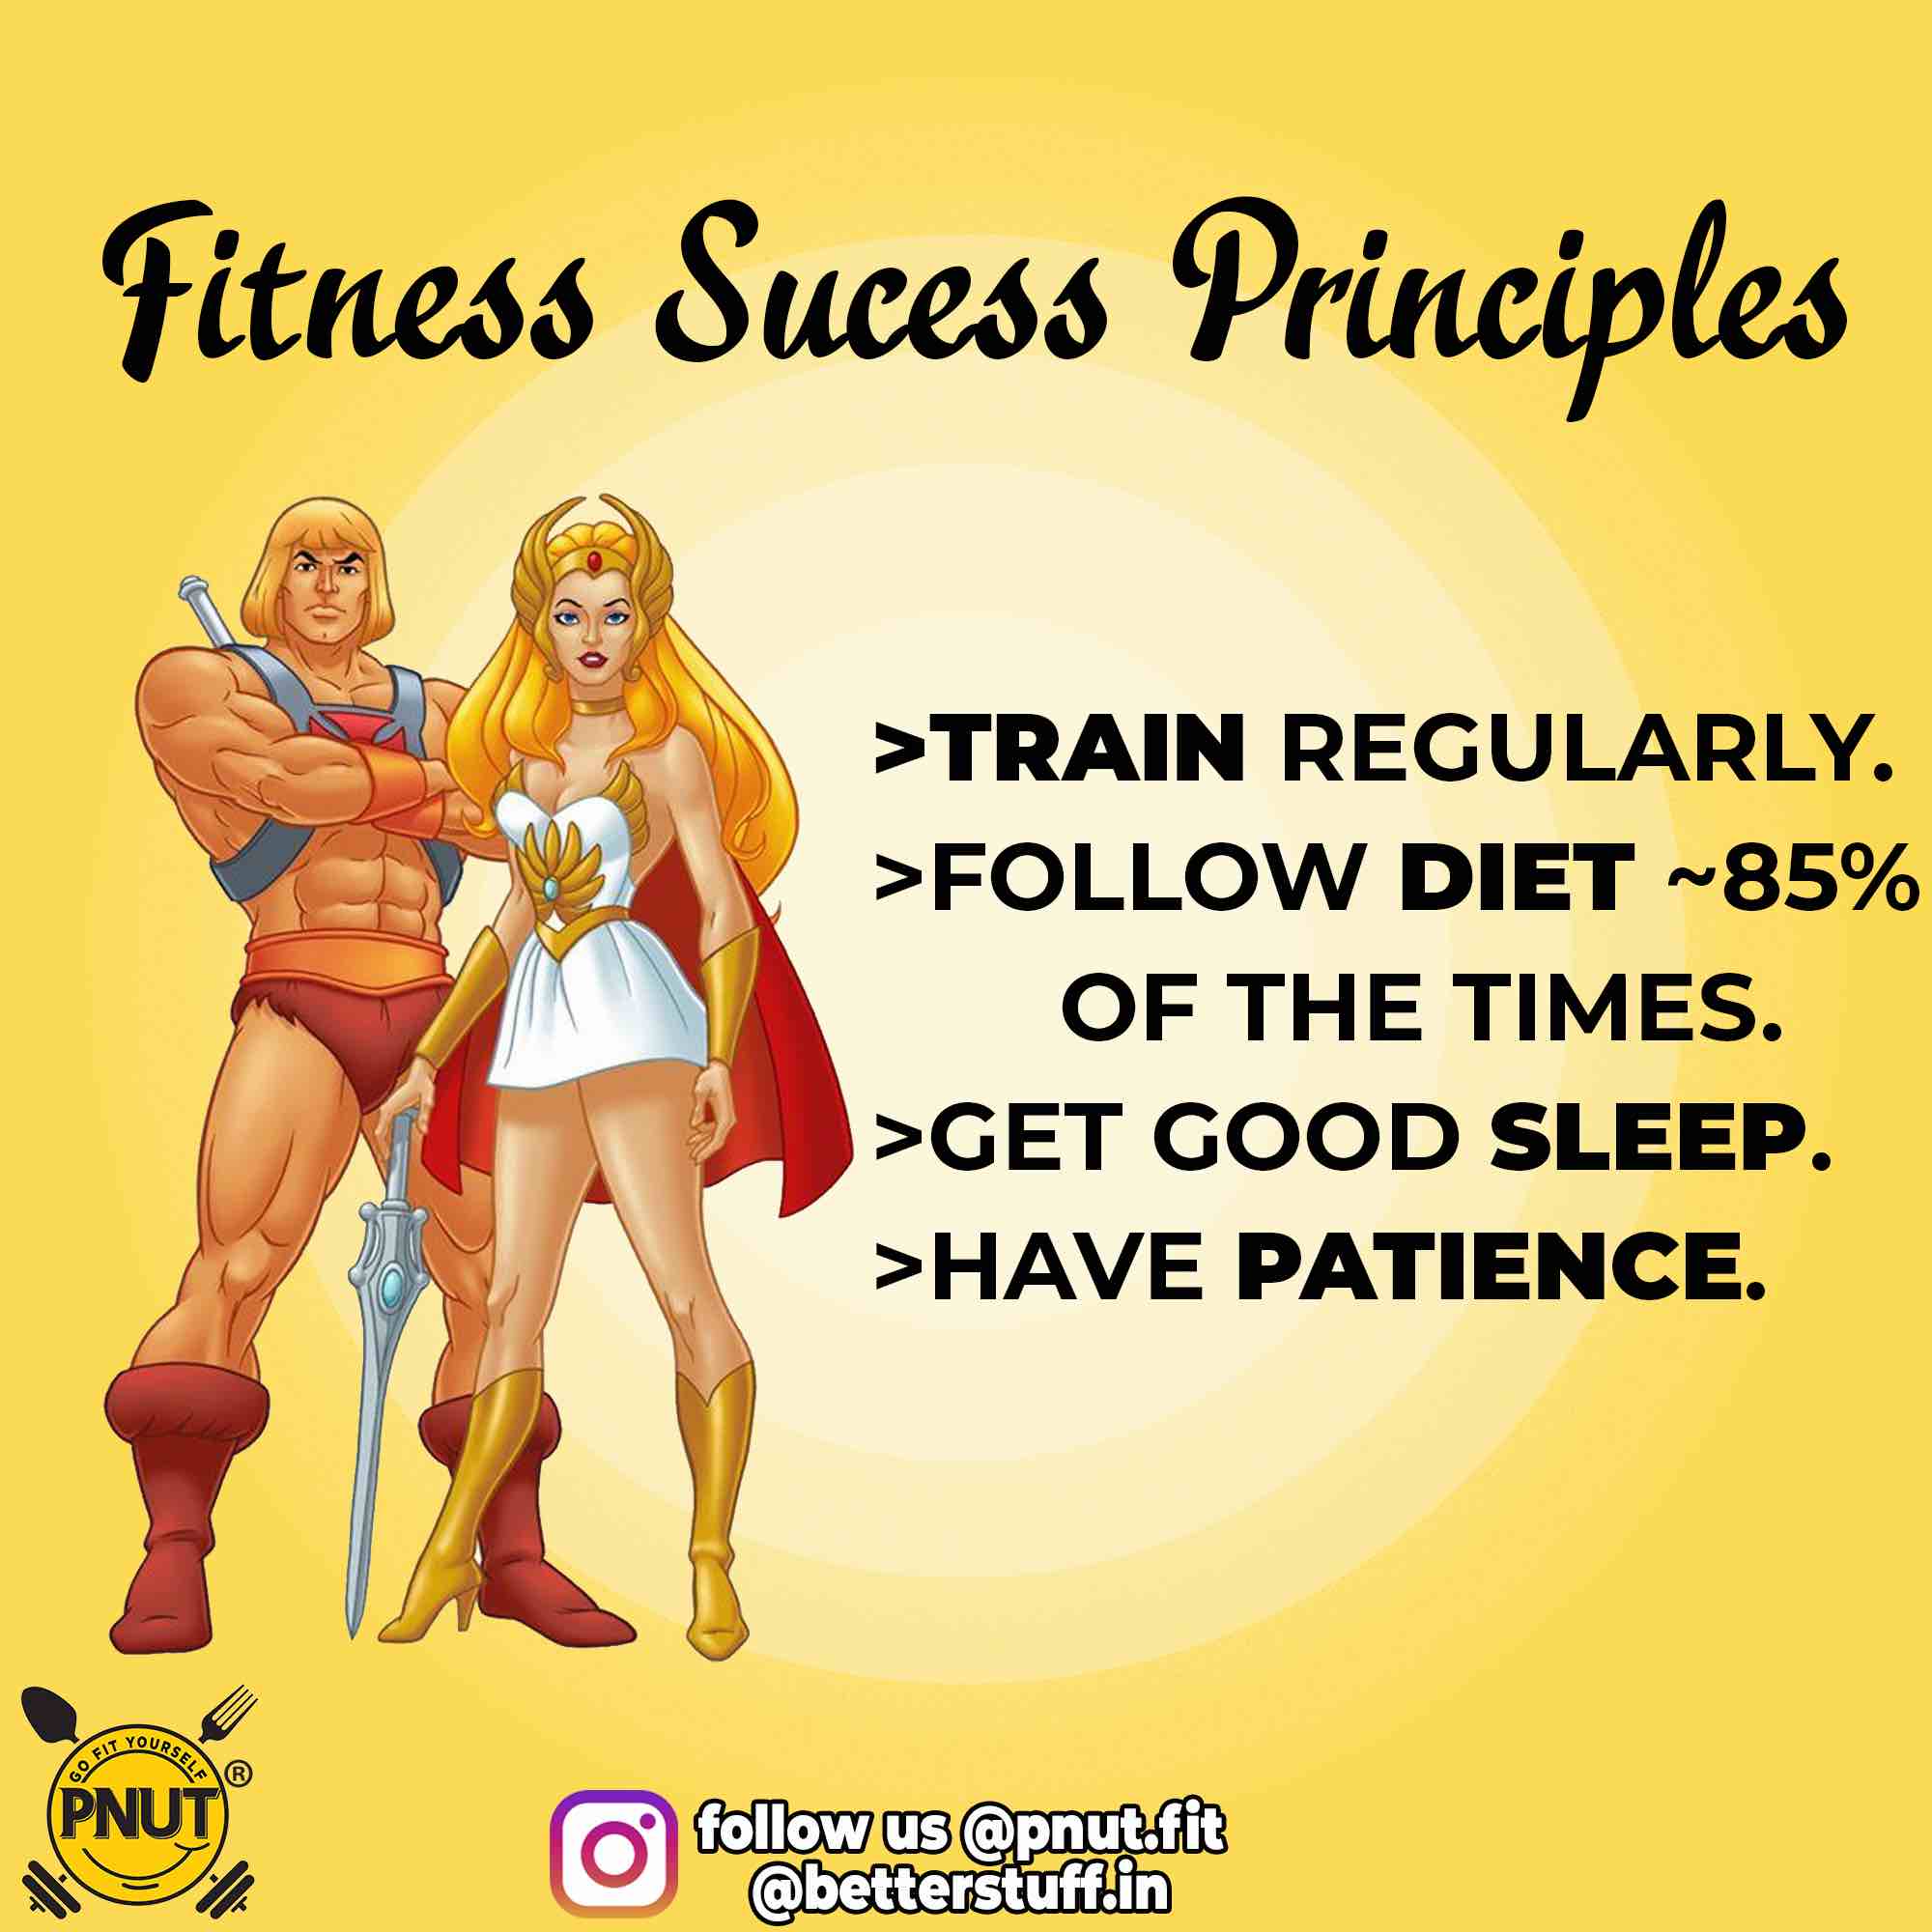 Basic 4 keys to a healthy success (read below) 